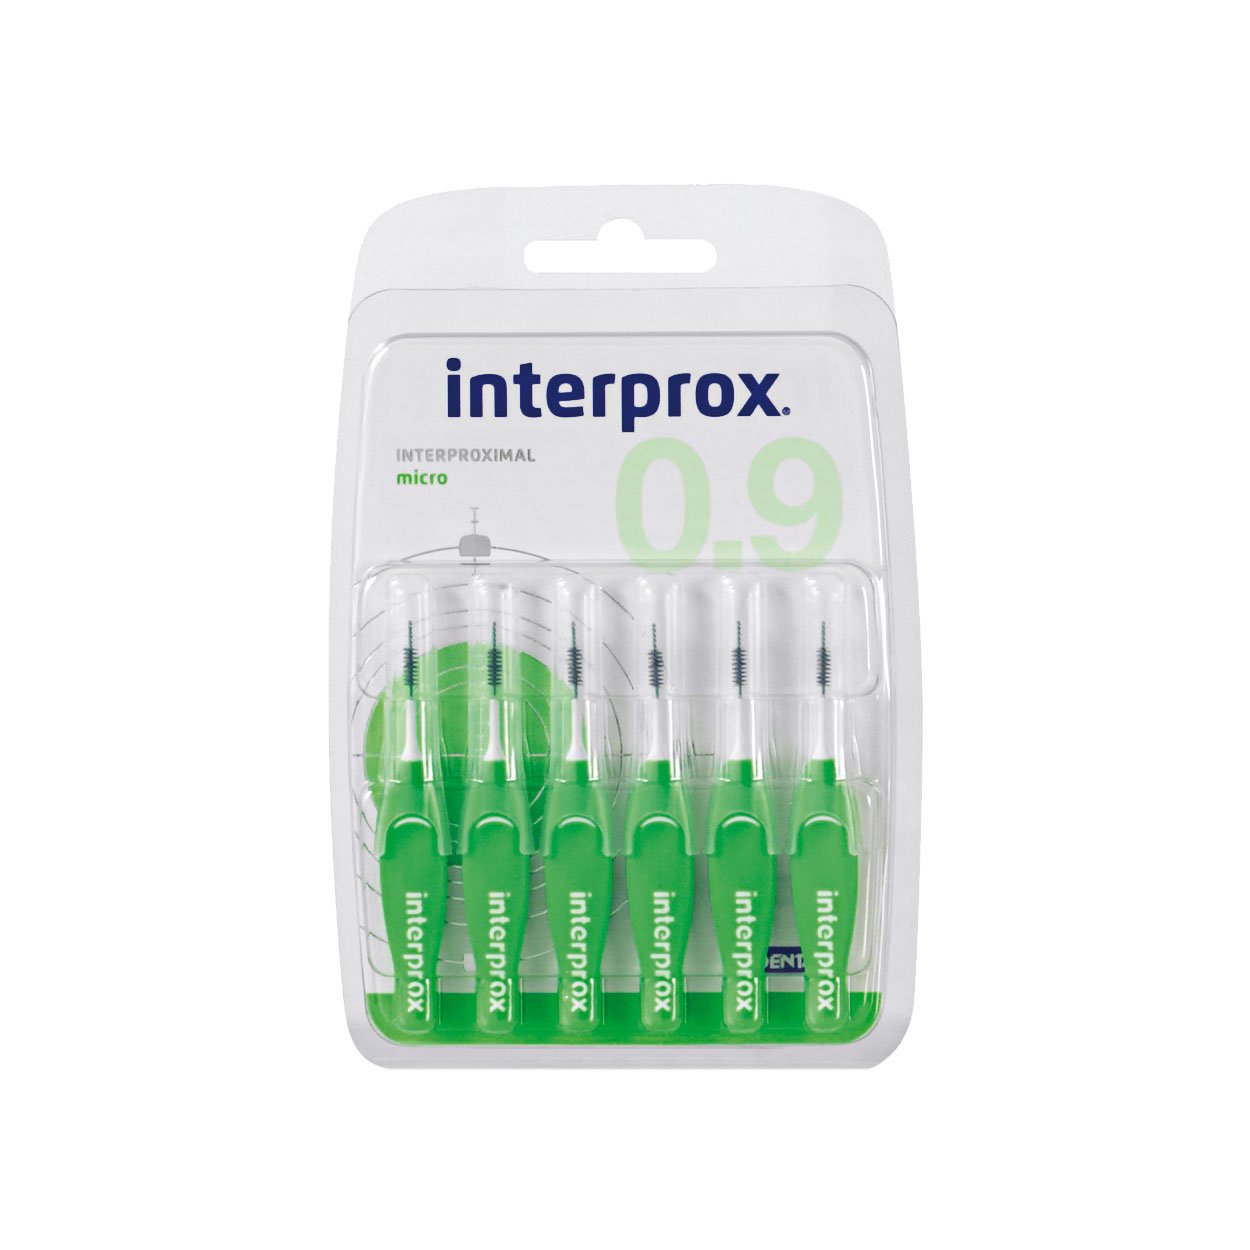 Interprox Interdentalbürsten grün micro 6 Stück, 6er Pack (6x 6 Stück)